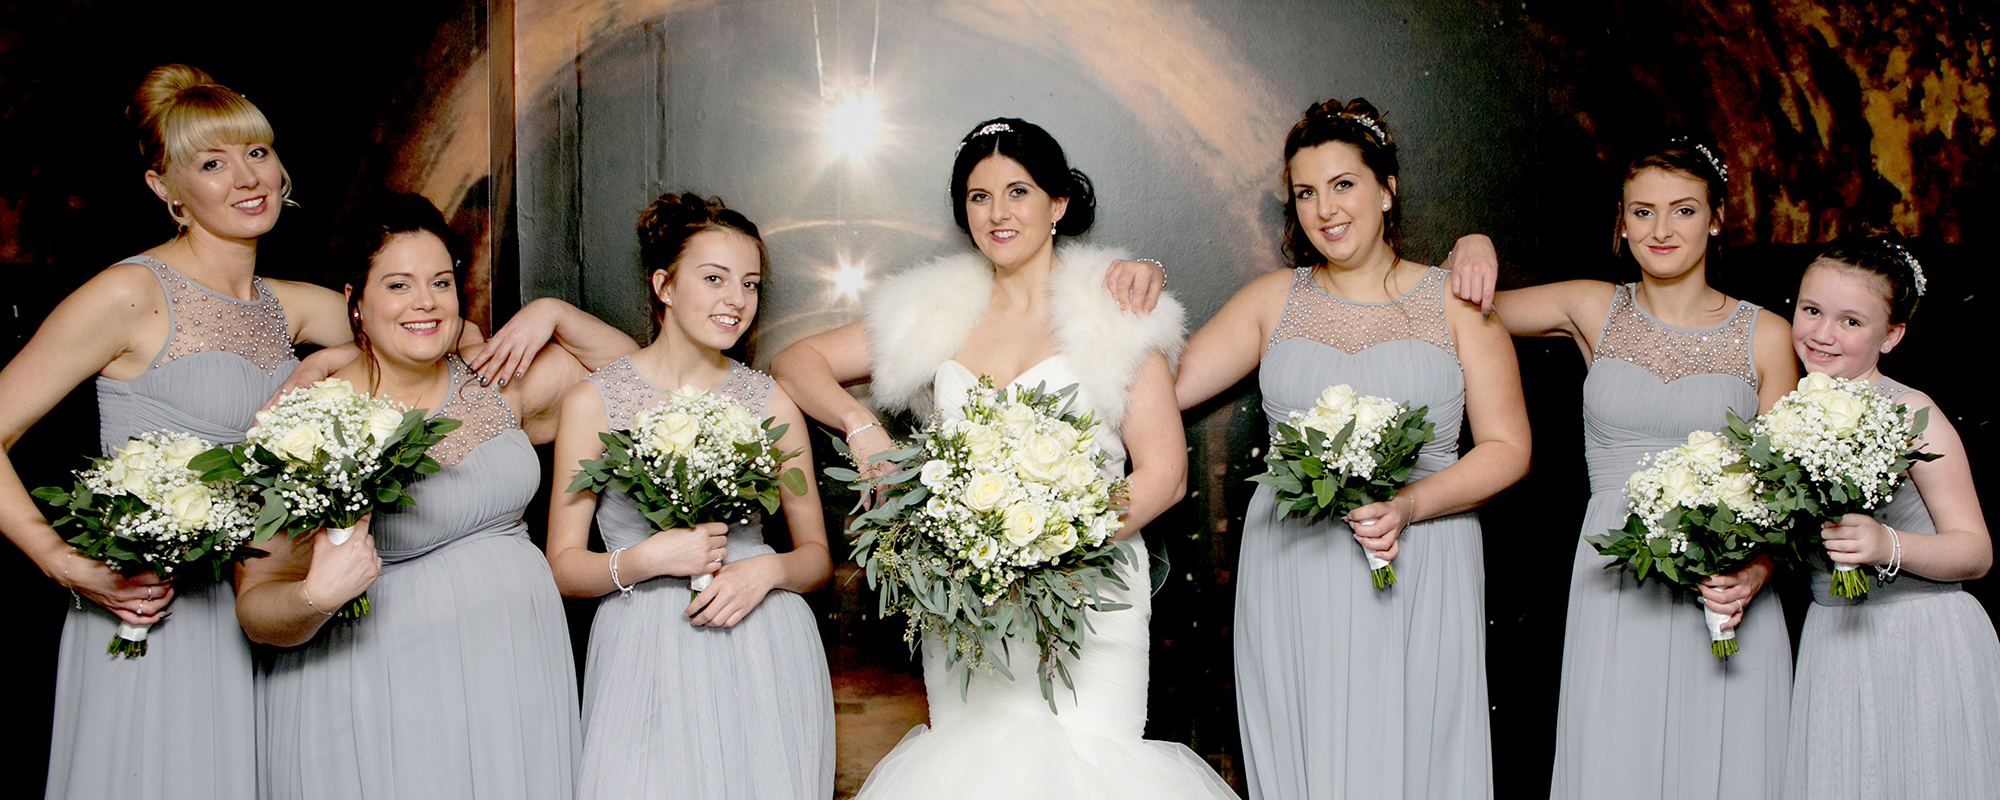 Captcha_wedding_bridesmaids.jpg